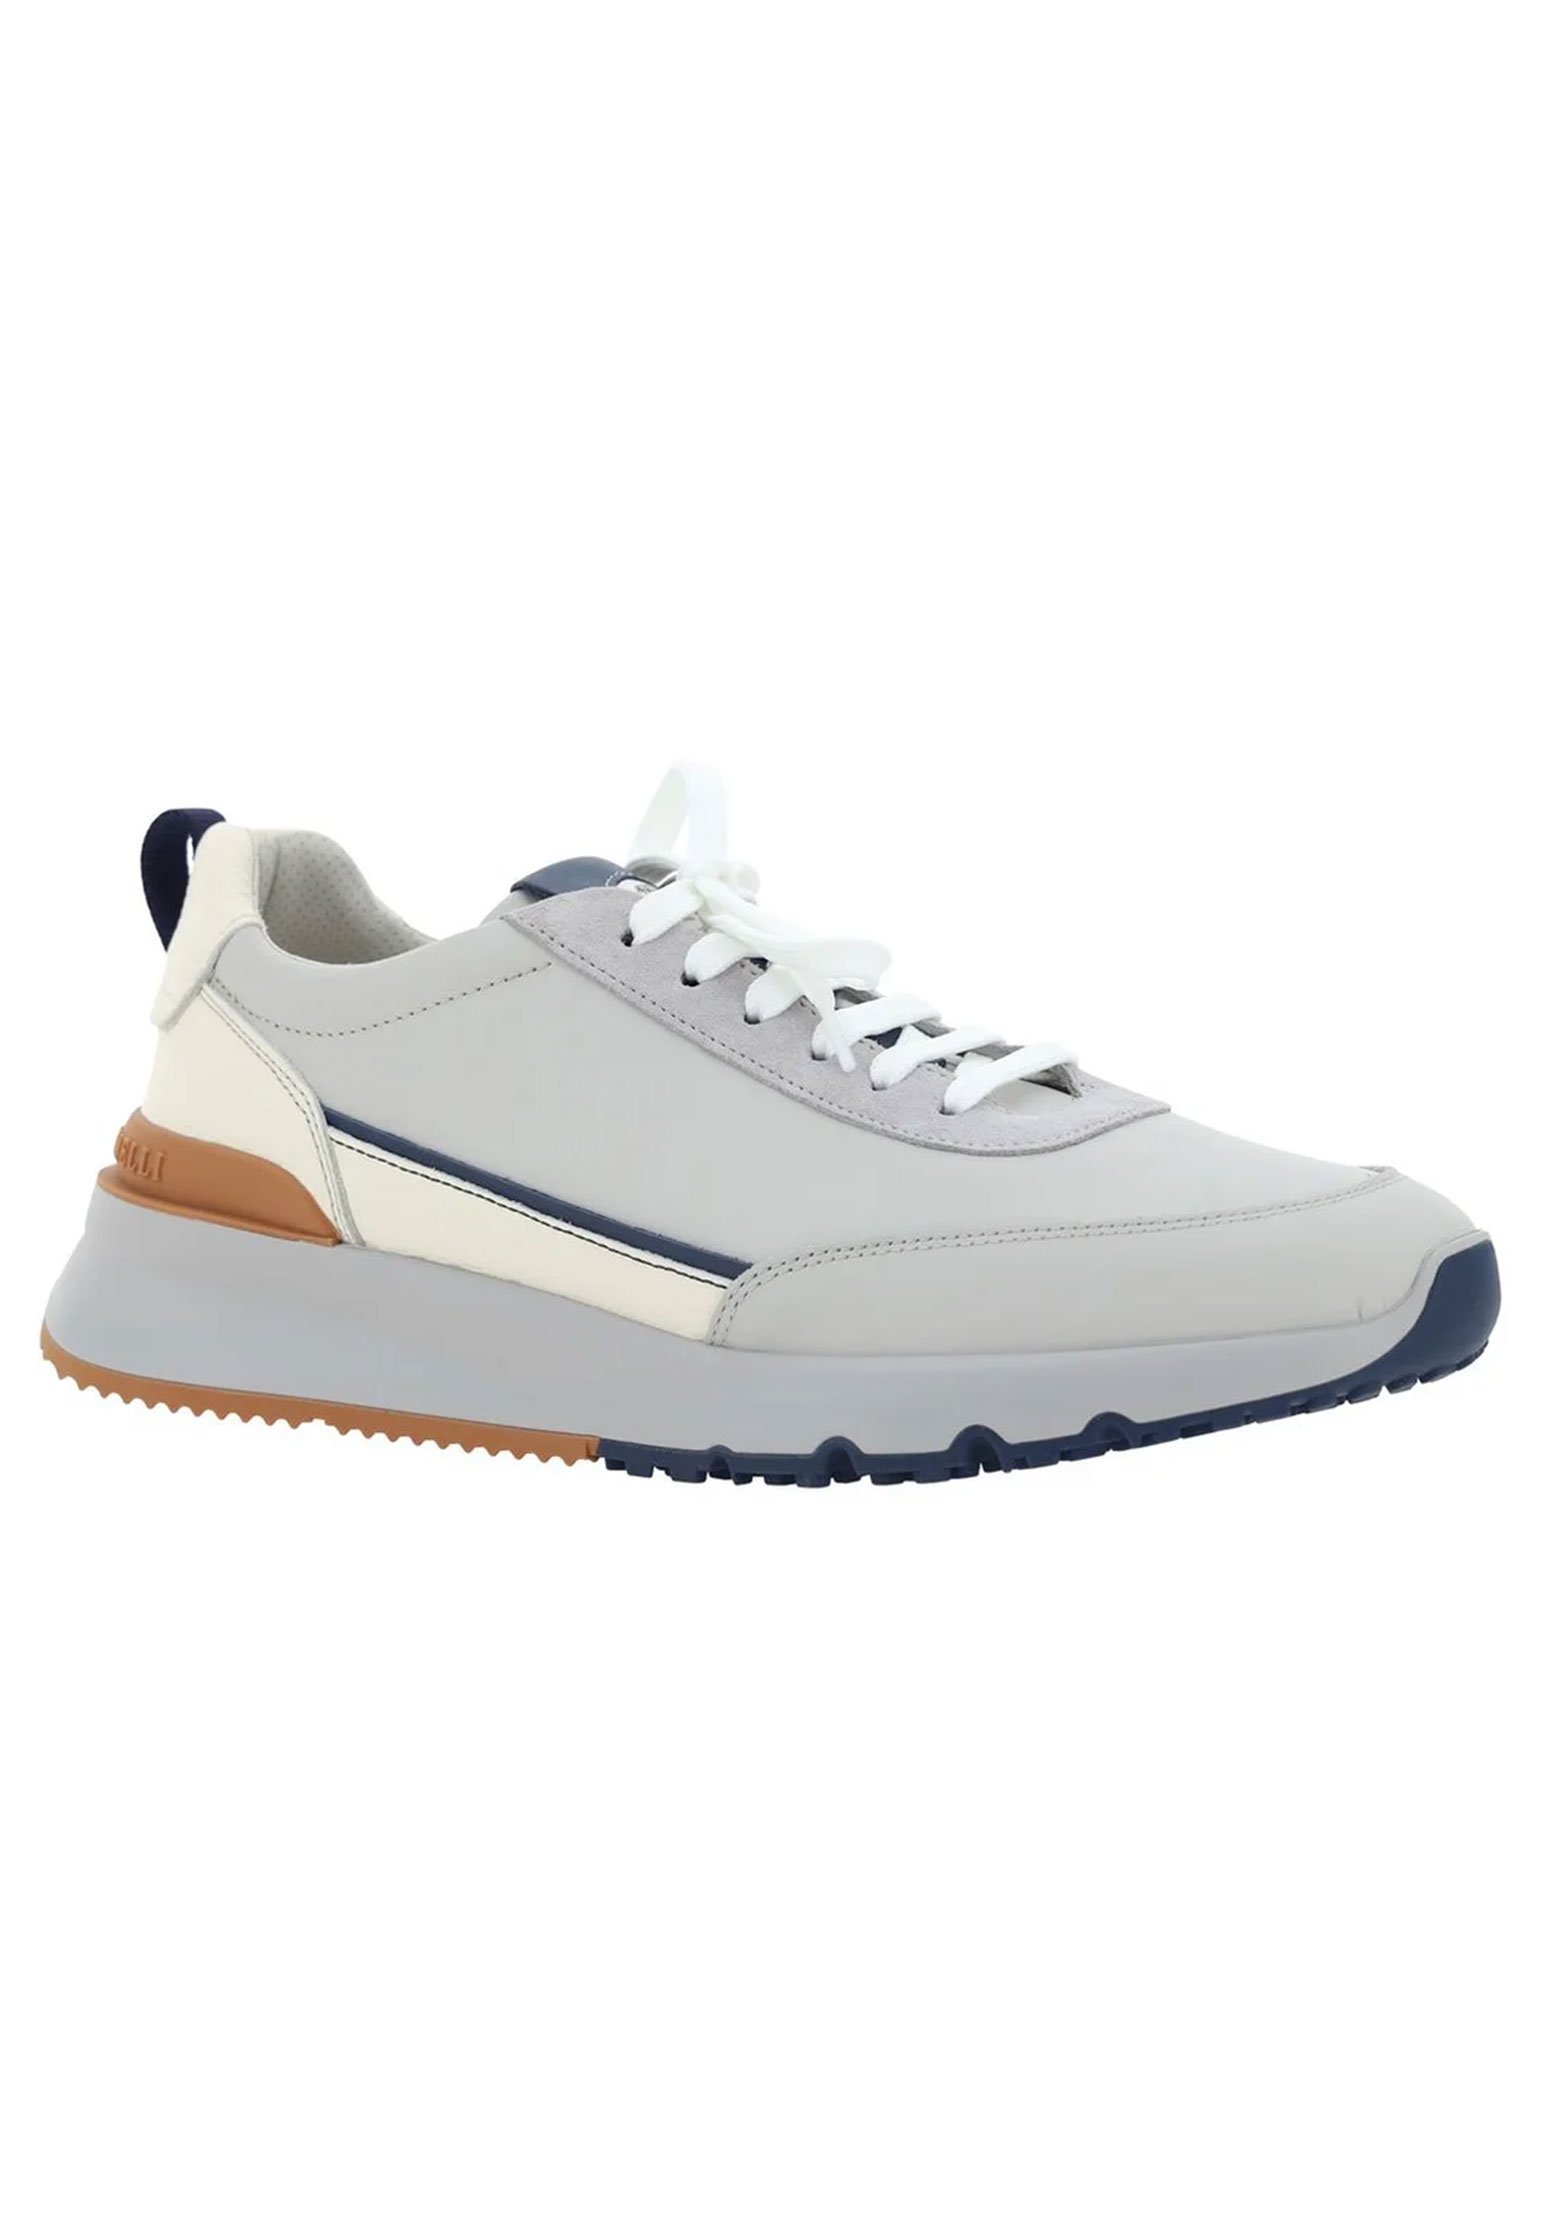 Sneakers BRUNELLO CUCINELLI Color: grey (Code: 3487) in online store Allure